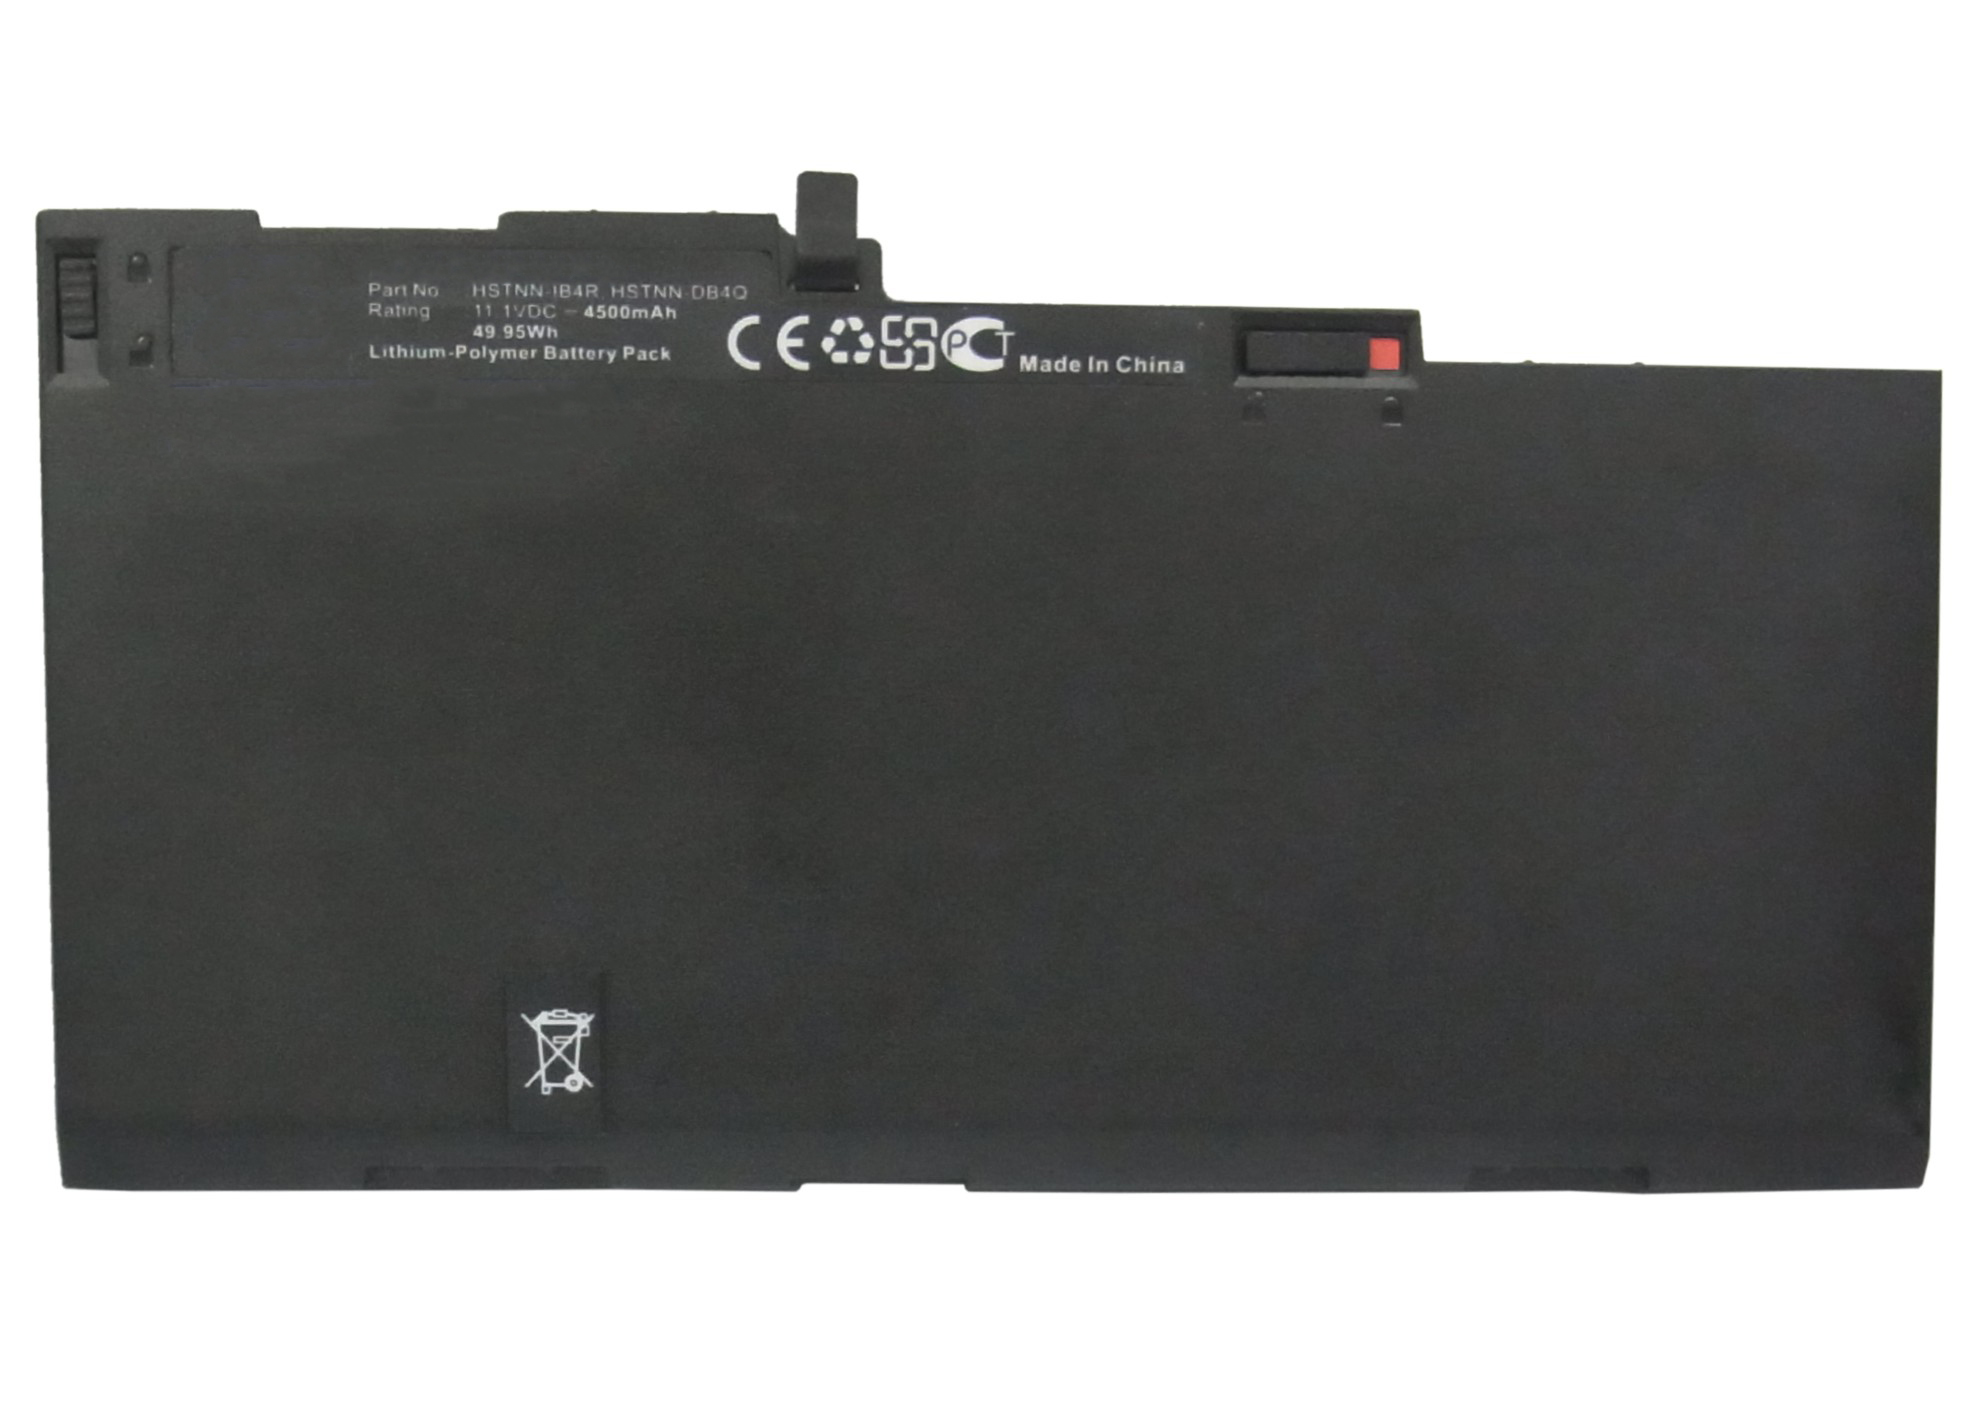 Synergy Digital Battery Compatible With HP 716724-1C1 Laptop Battery - (Li-Pol, 11.1V, 4500 mAh)